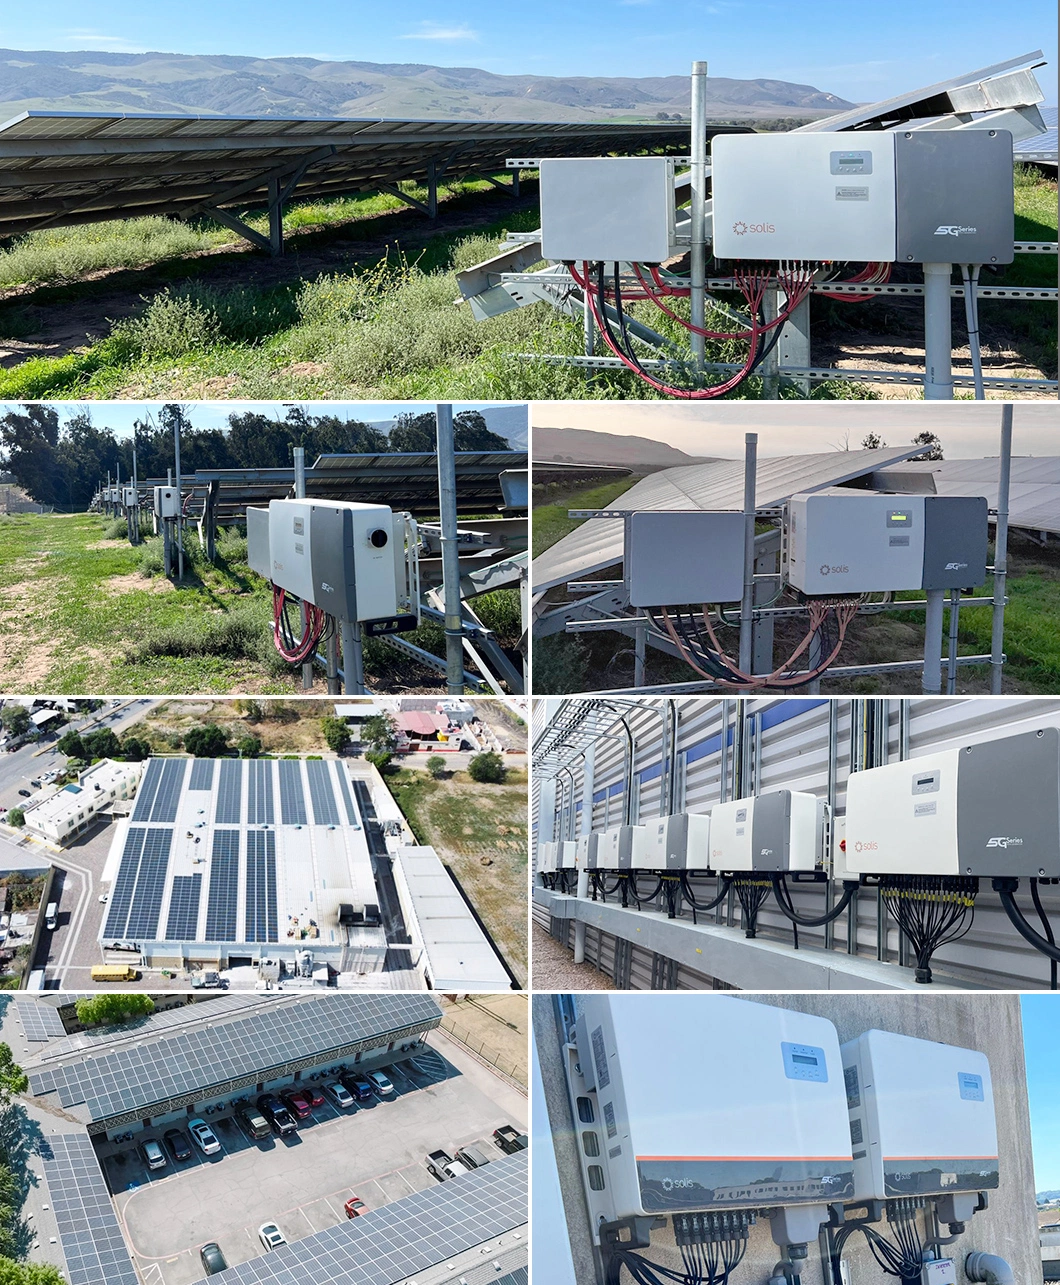 Sunevo on Grid Solar System 50kw Complete 50 Kw 500kw Solar Power Plant Kit